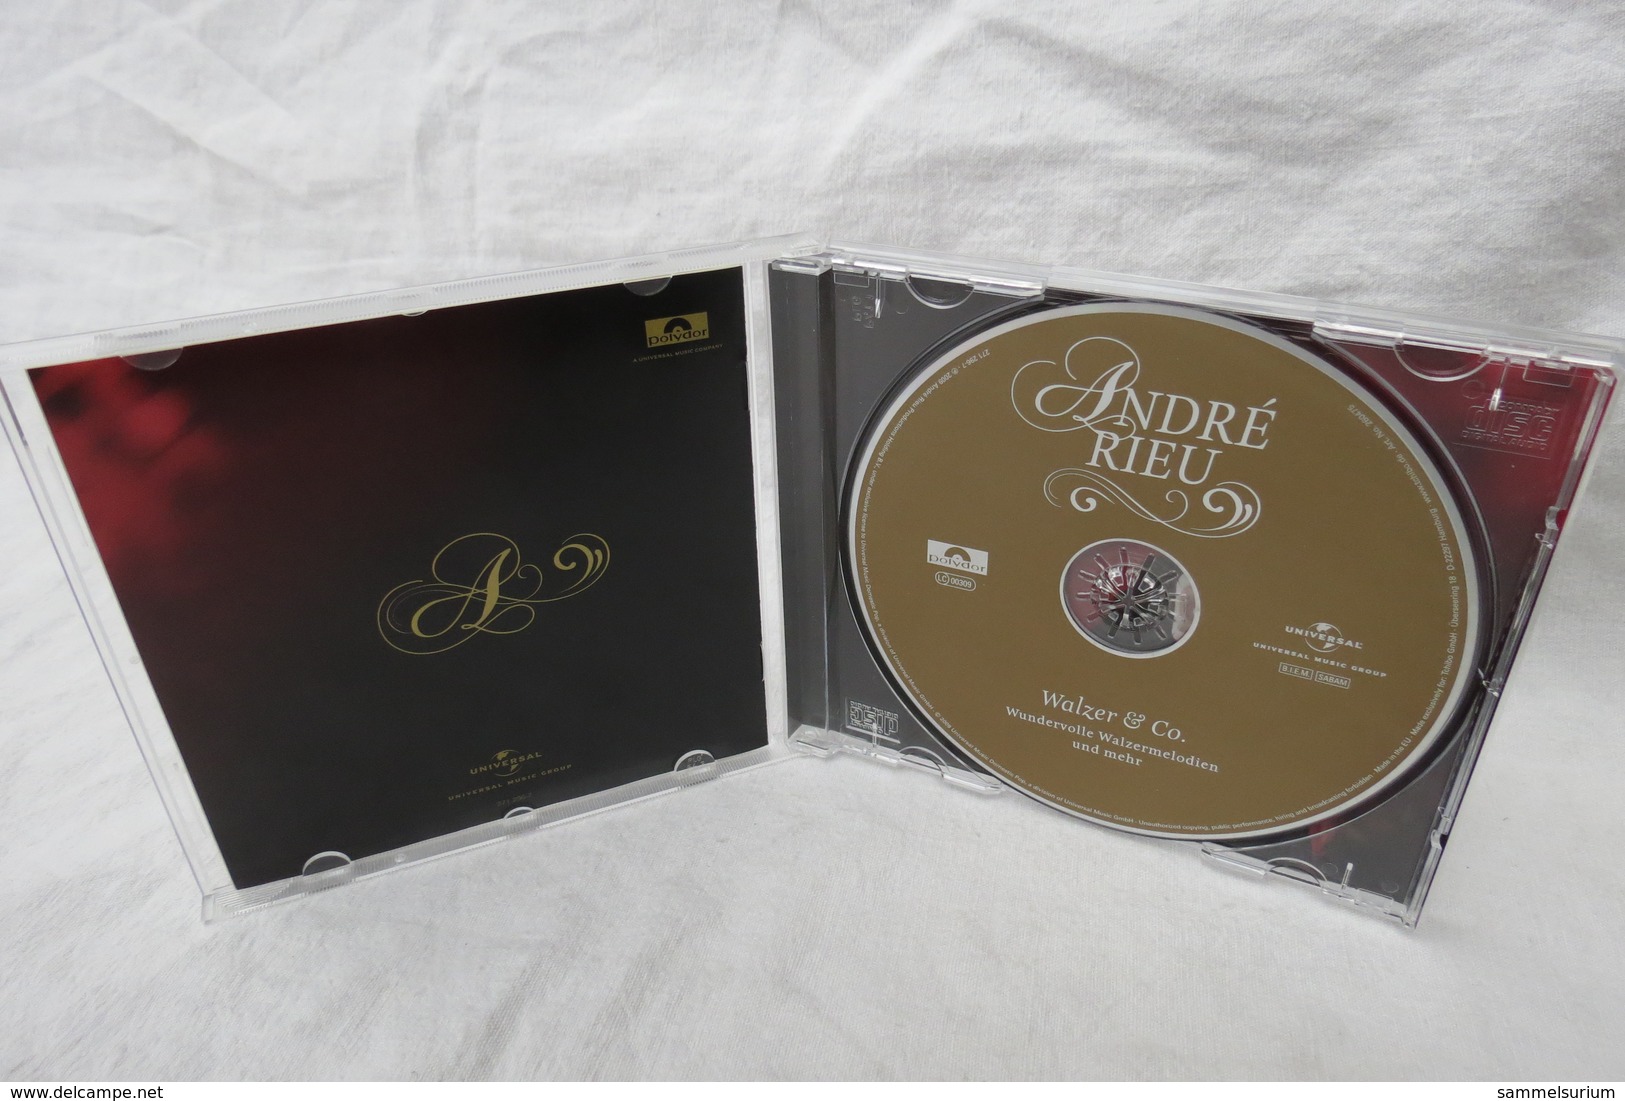 CD "André Rieu" Walzer & Co. - Strumentali